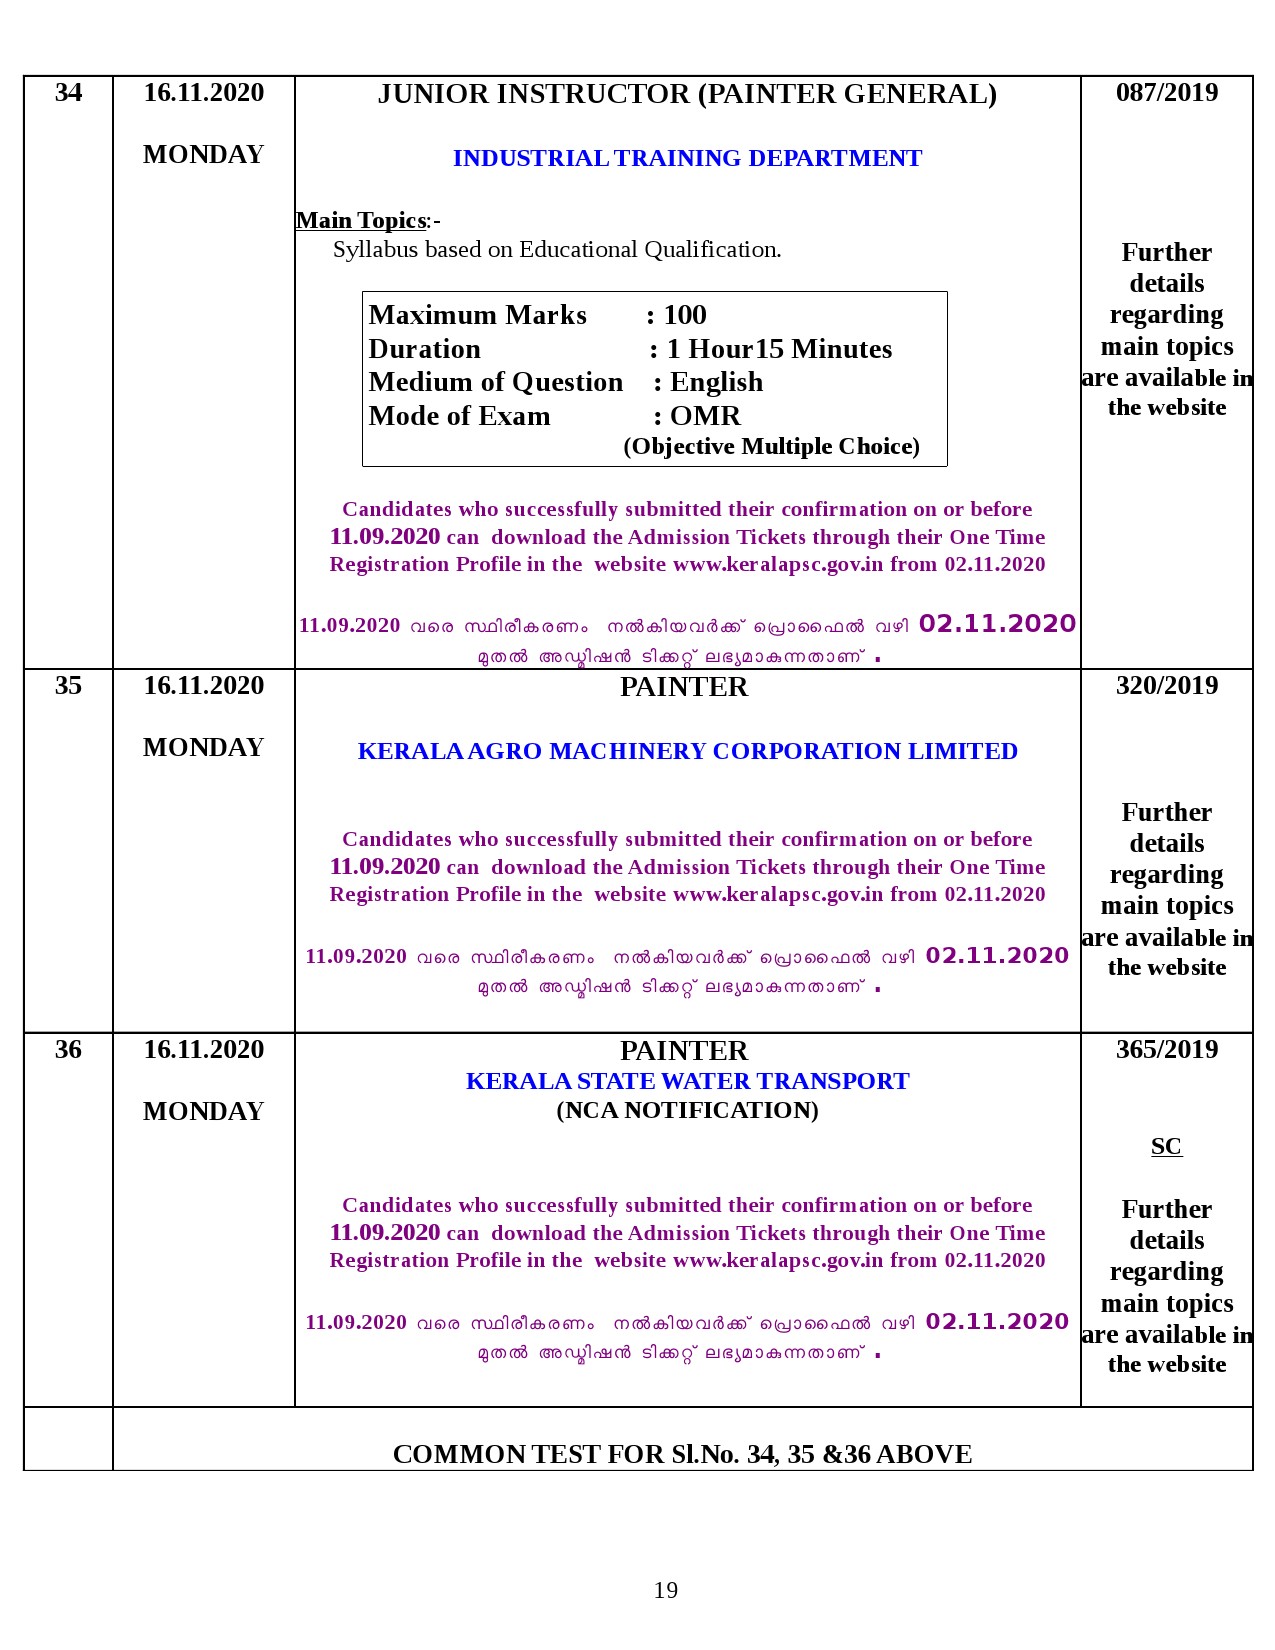 Kerala PSC Final Exam Schedule for November 2020 - Notification Image 19